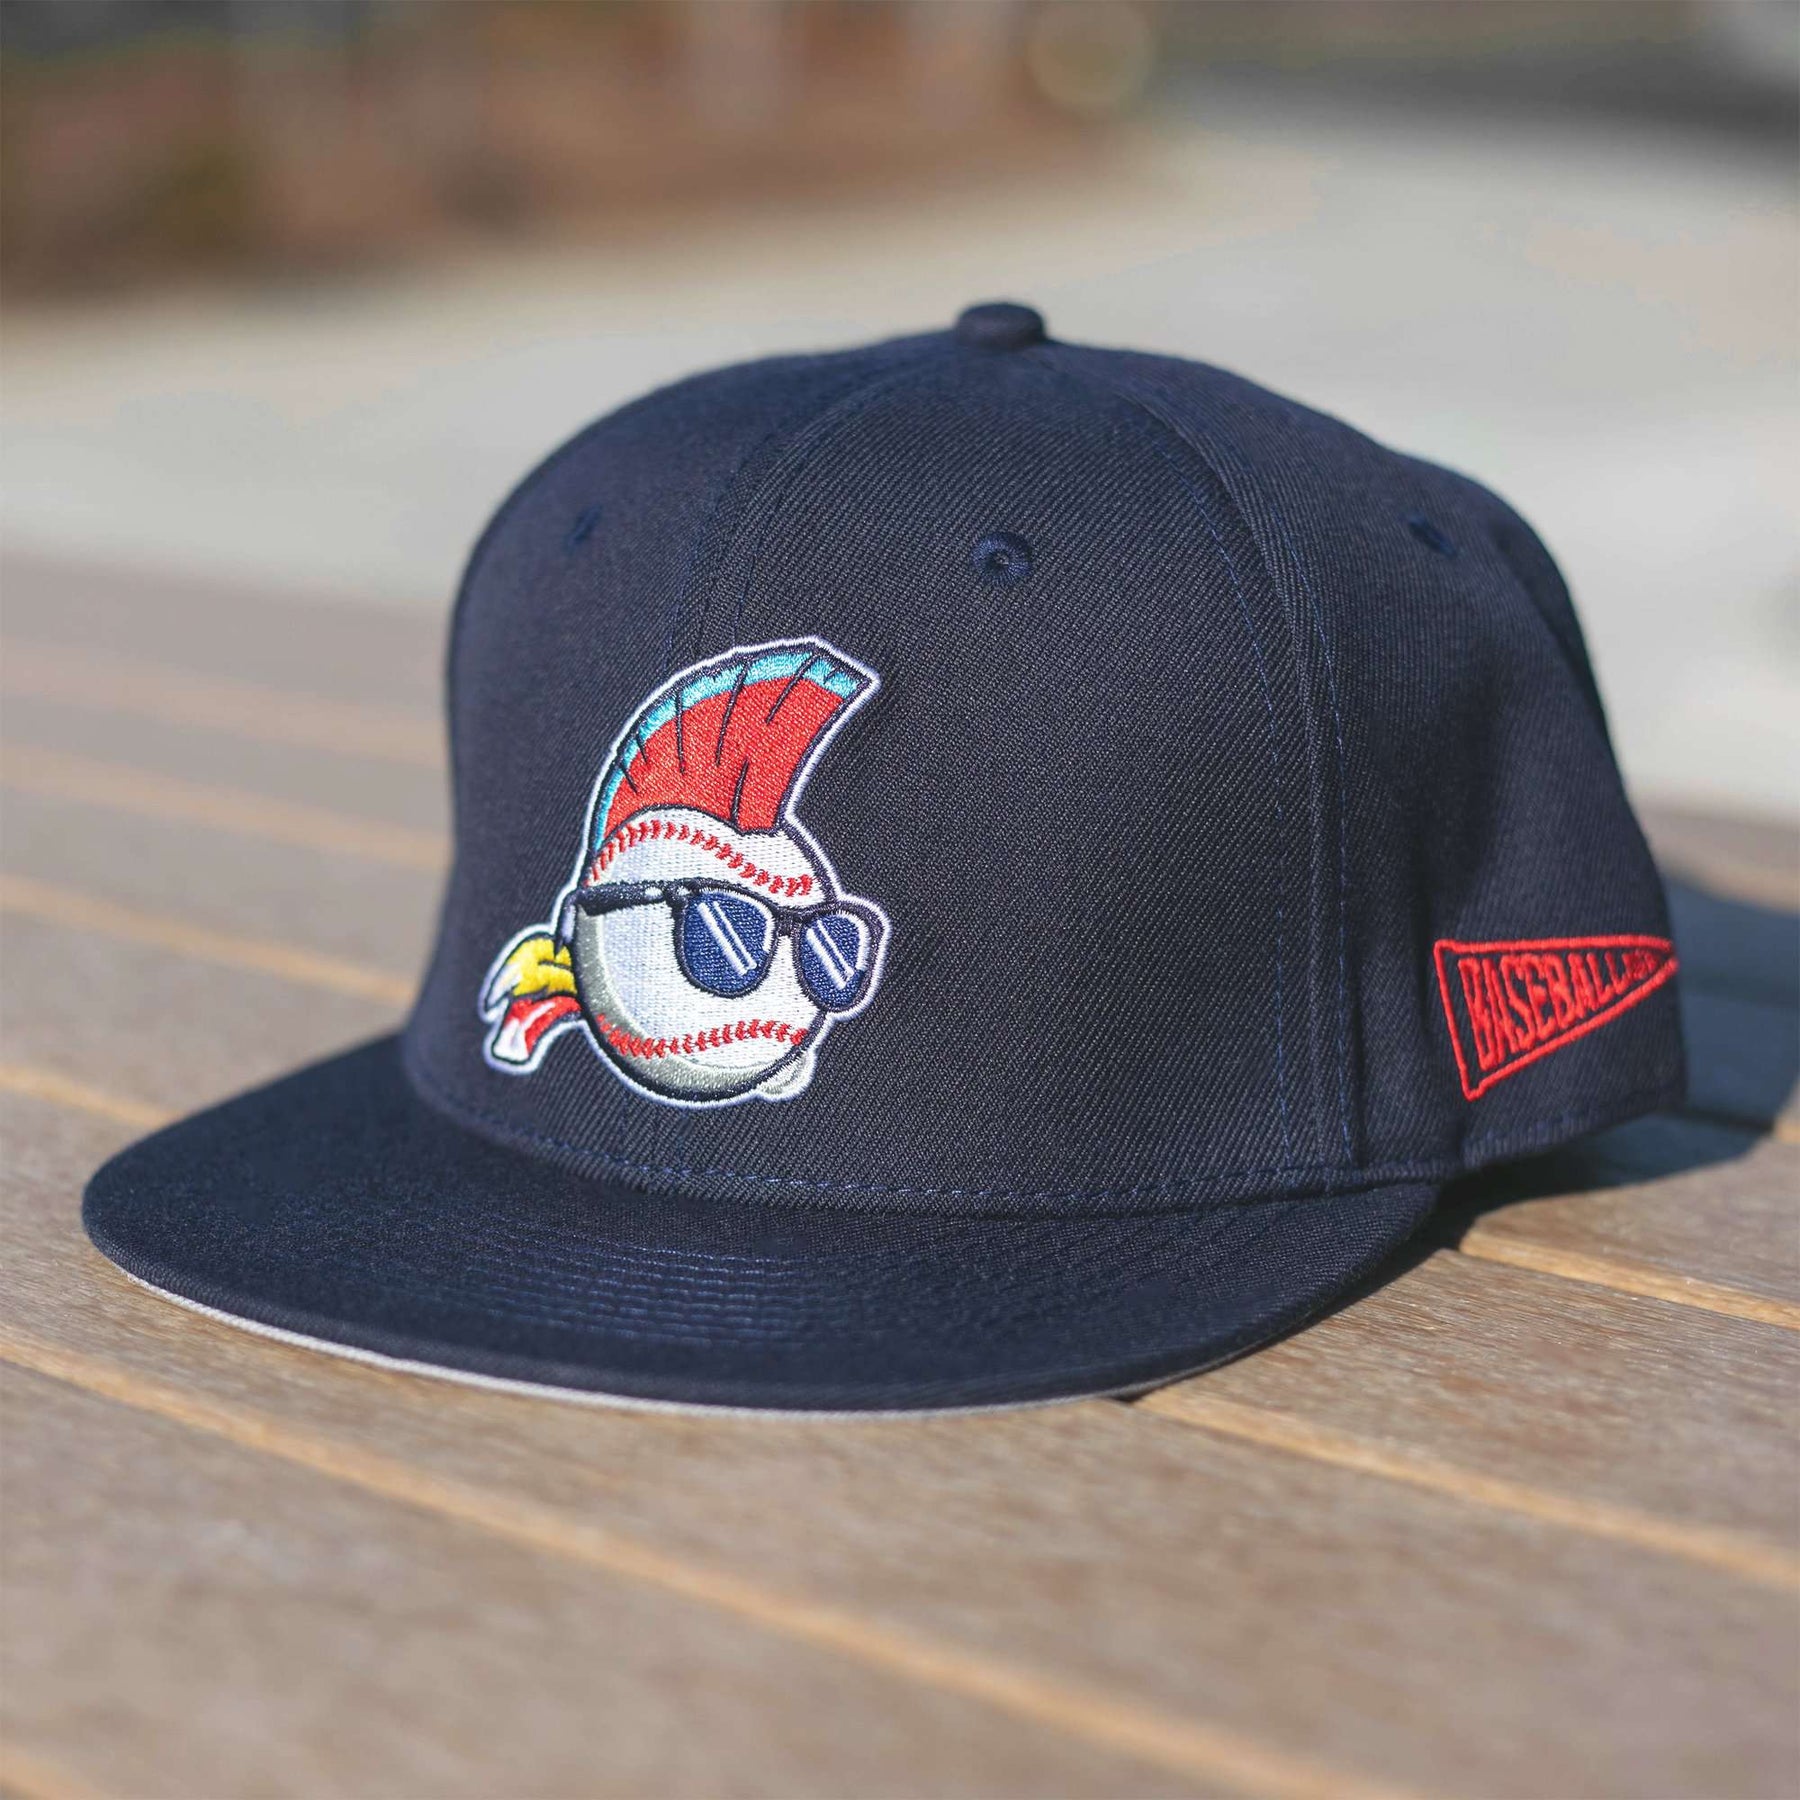 MLB Baseball Caps Hats  Clothing  New Era Cap UK